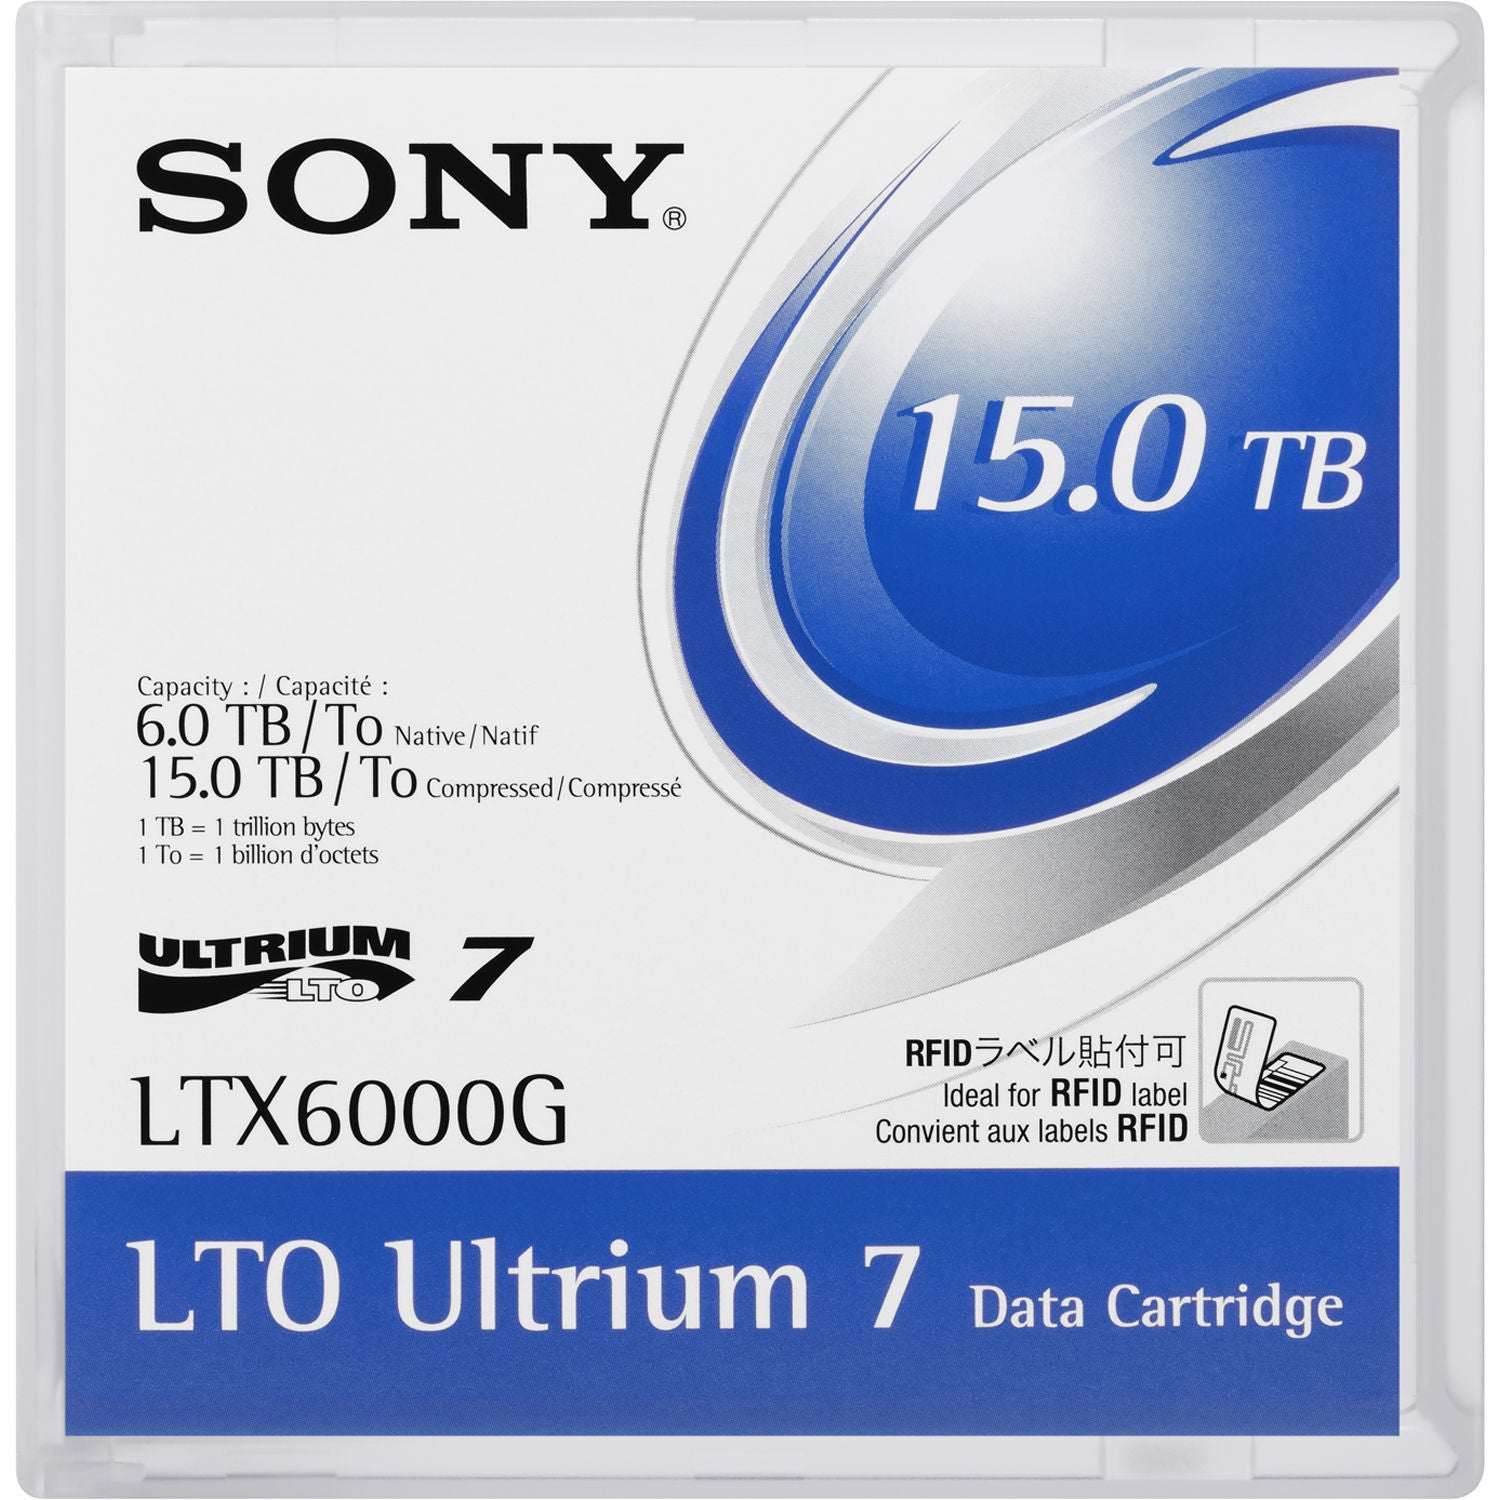 Sony LTO 7 Ultrium Data Cartridge Tape, LTX6000G